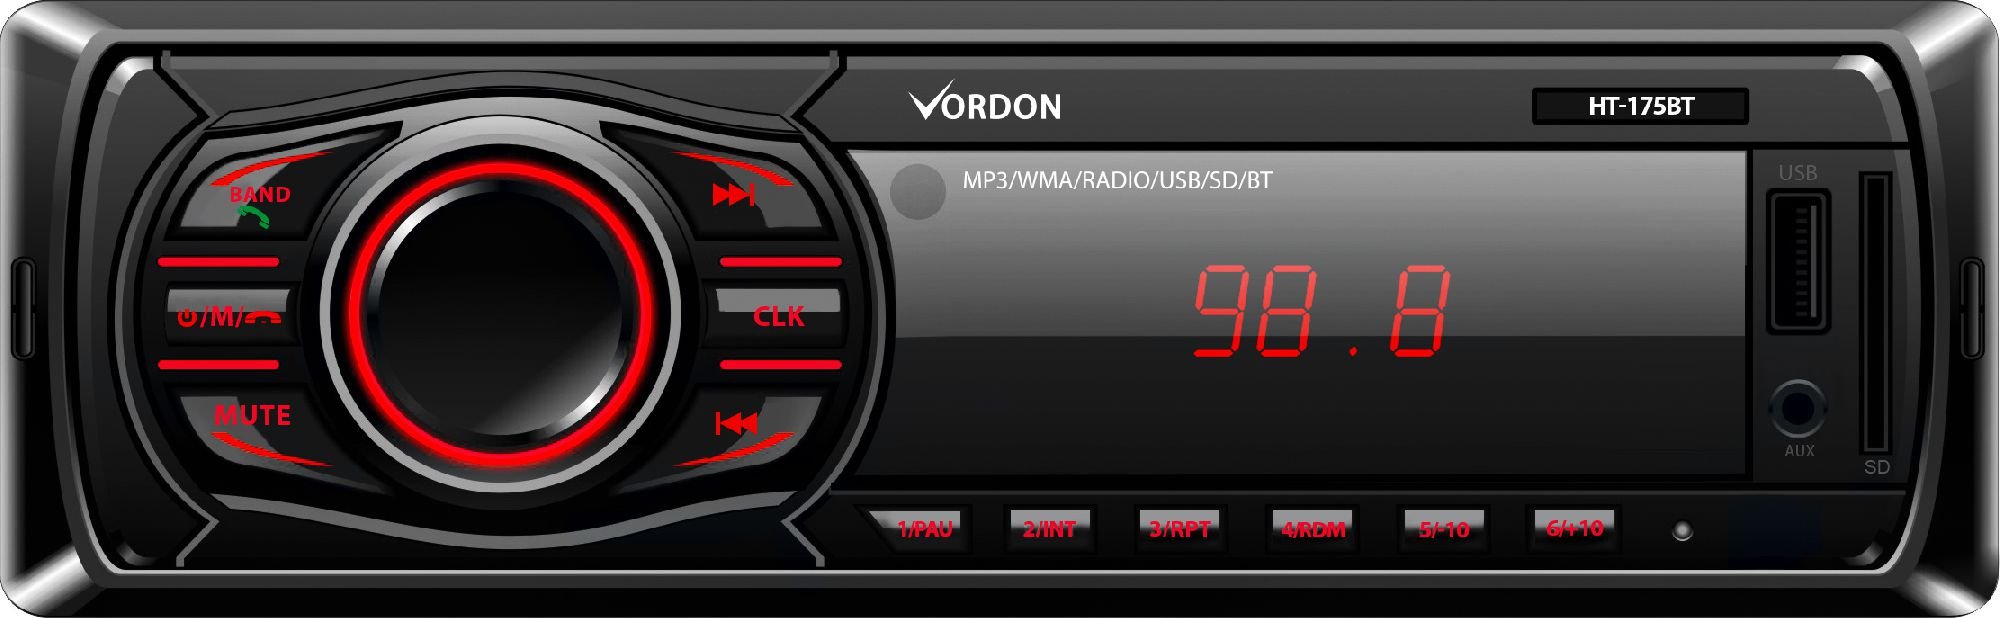 Radio, CD, DVD player auto - Player auto vordon HT-175BT